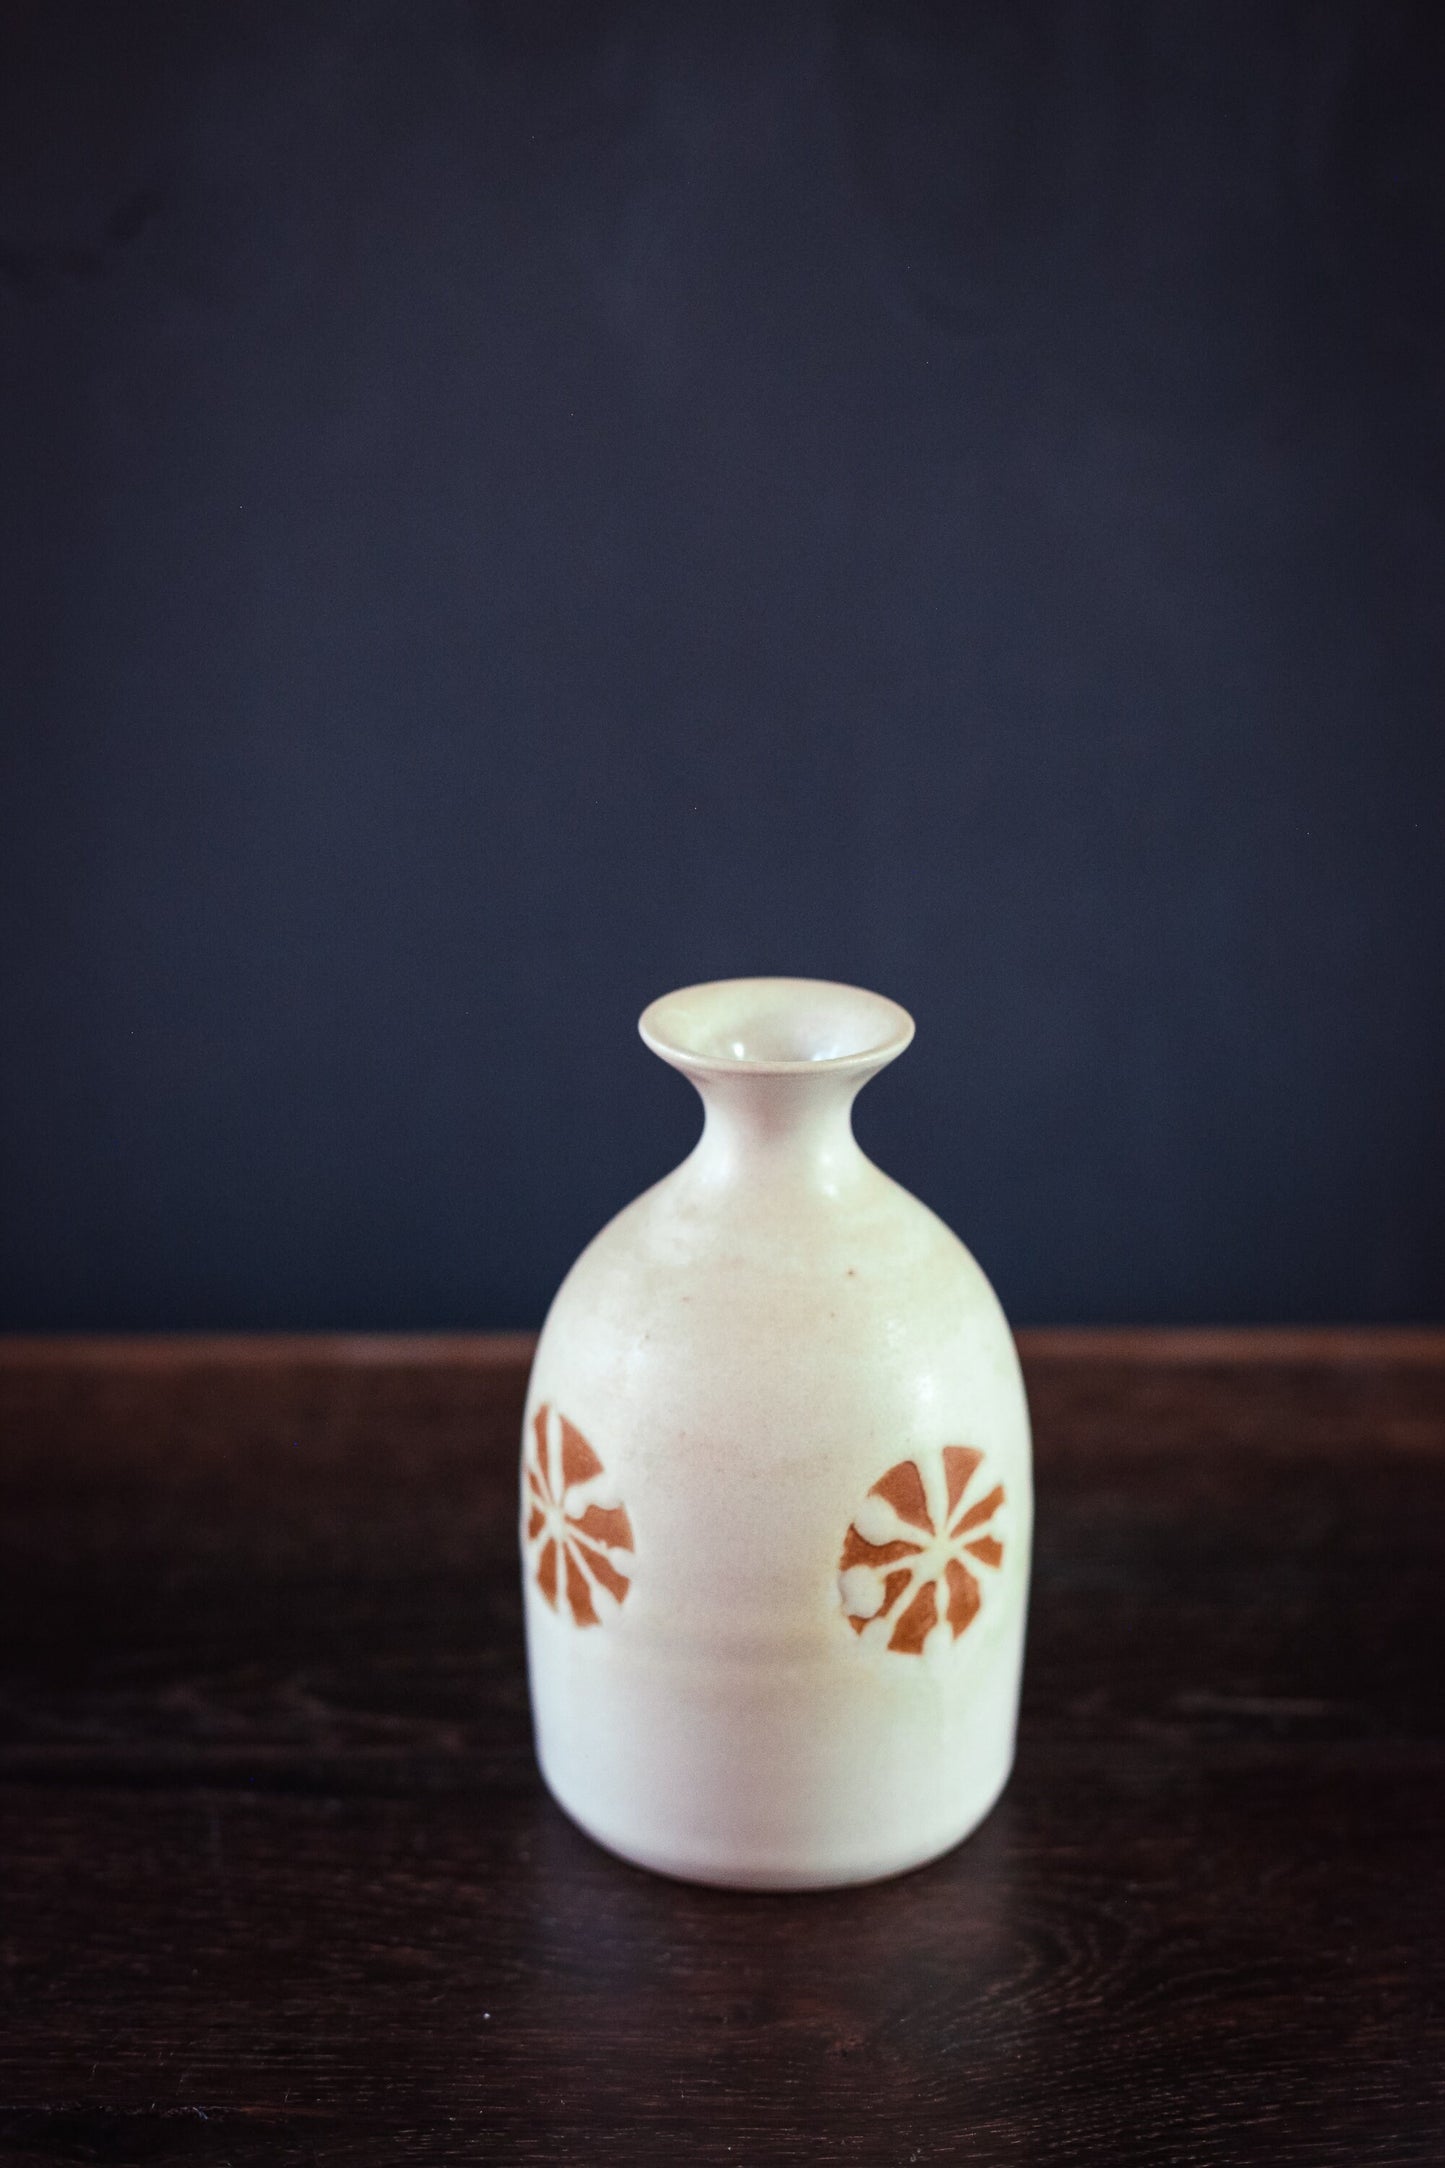 Hand Thrown Ceramic Sake Jar White and Yellow - Vintage Otagiri Ivory Sake Container with Sunburst Design made in Japan